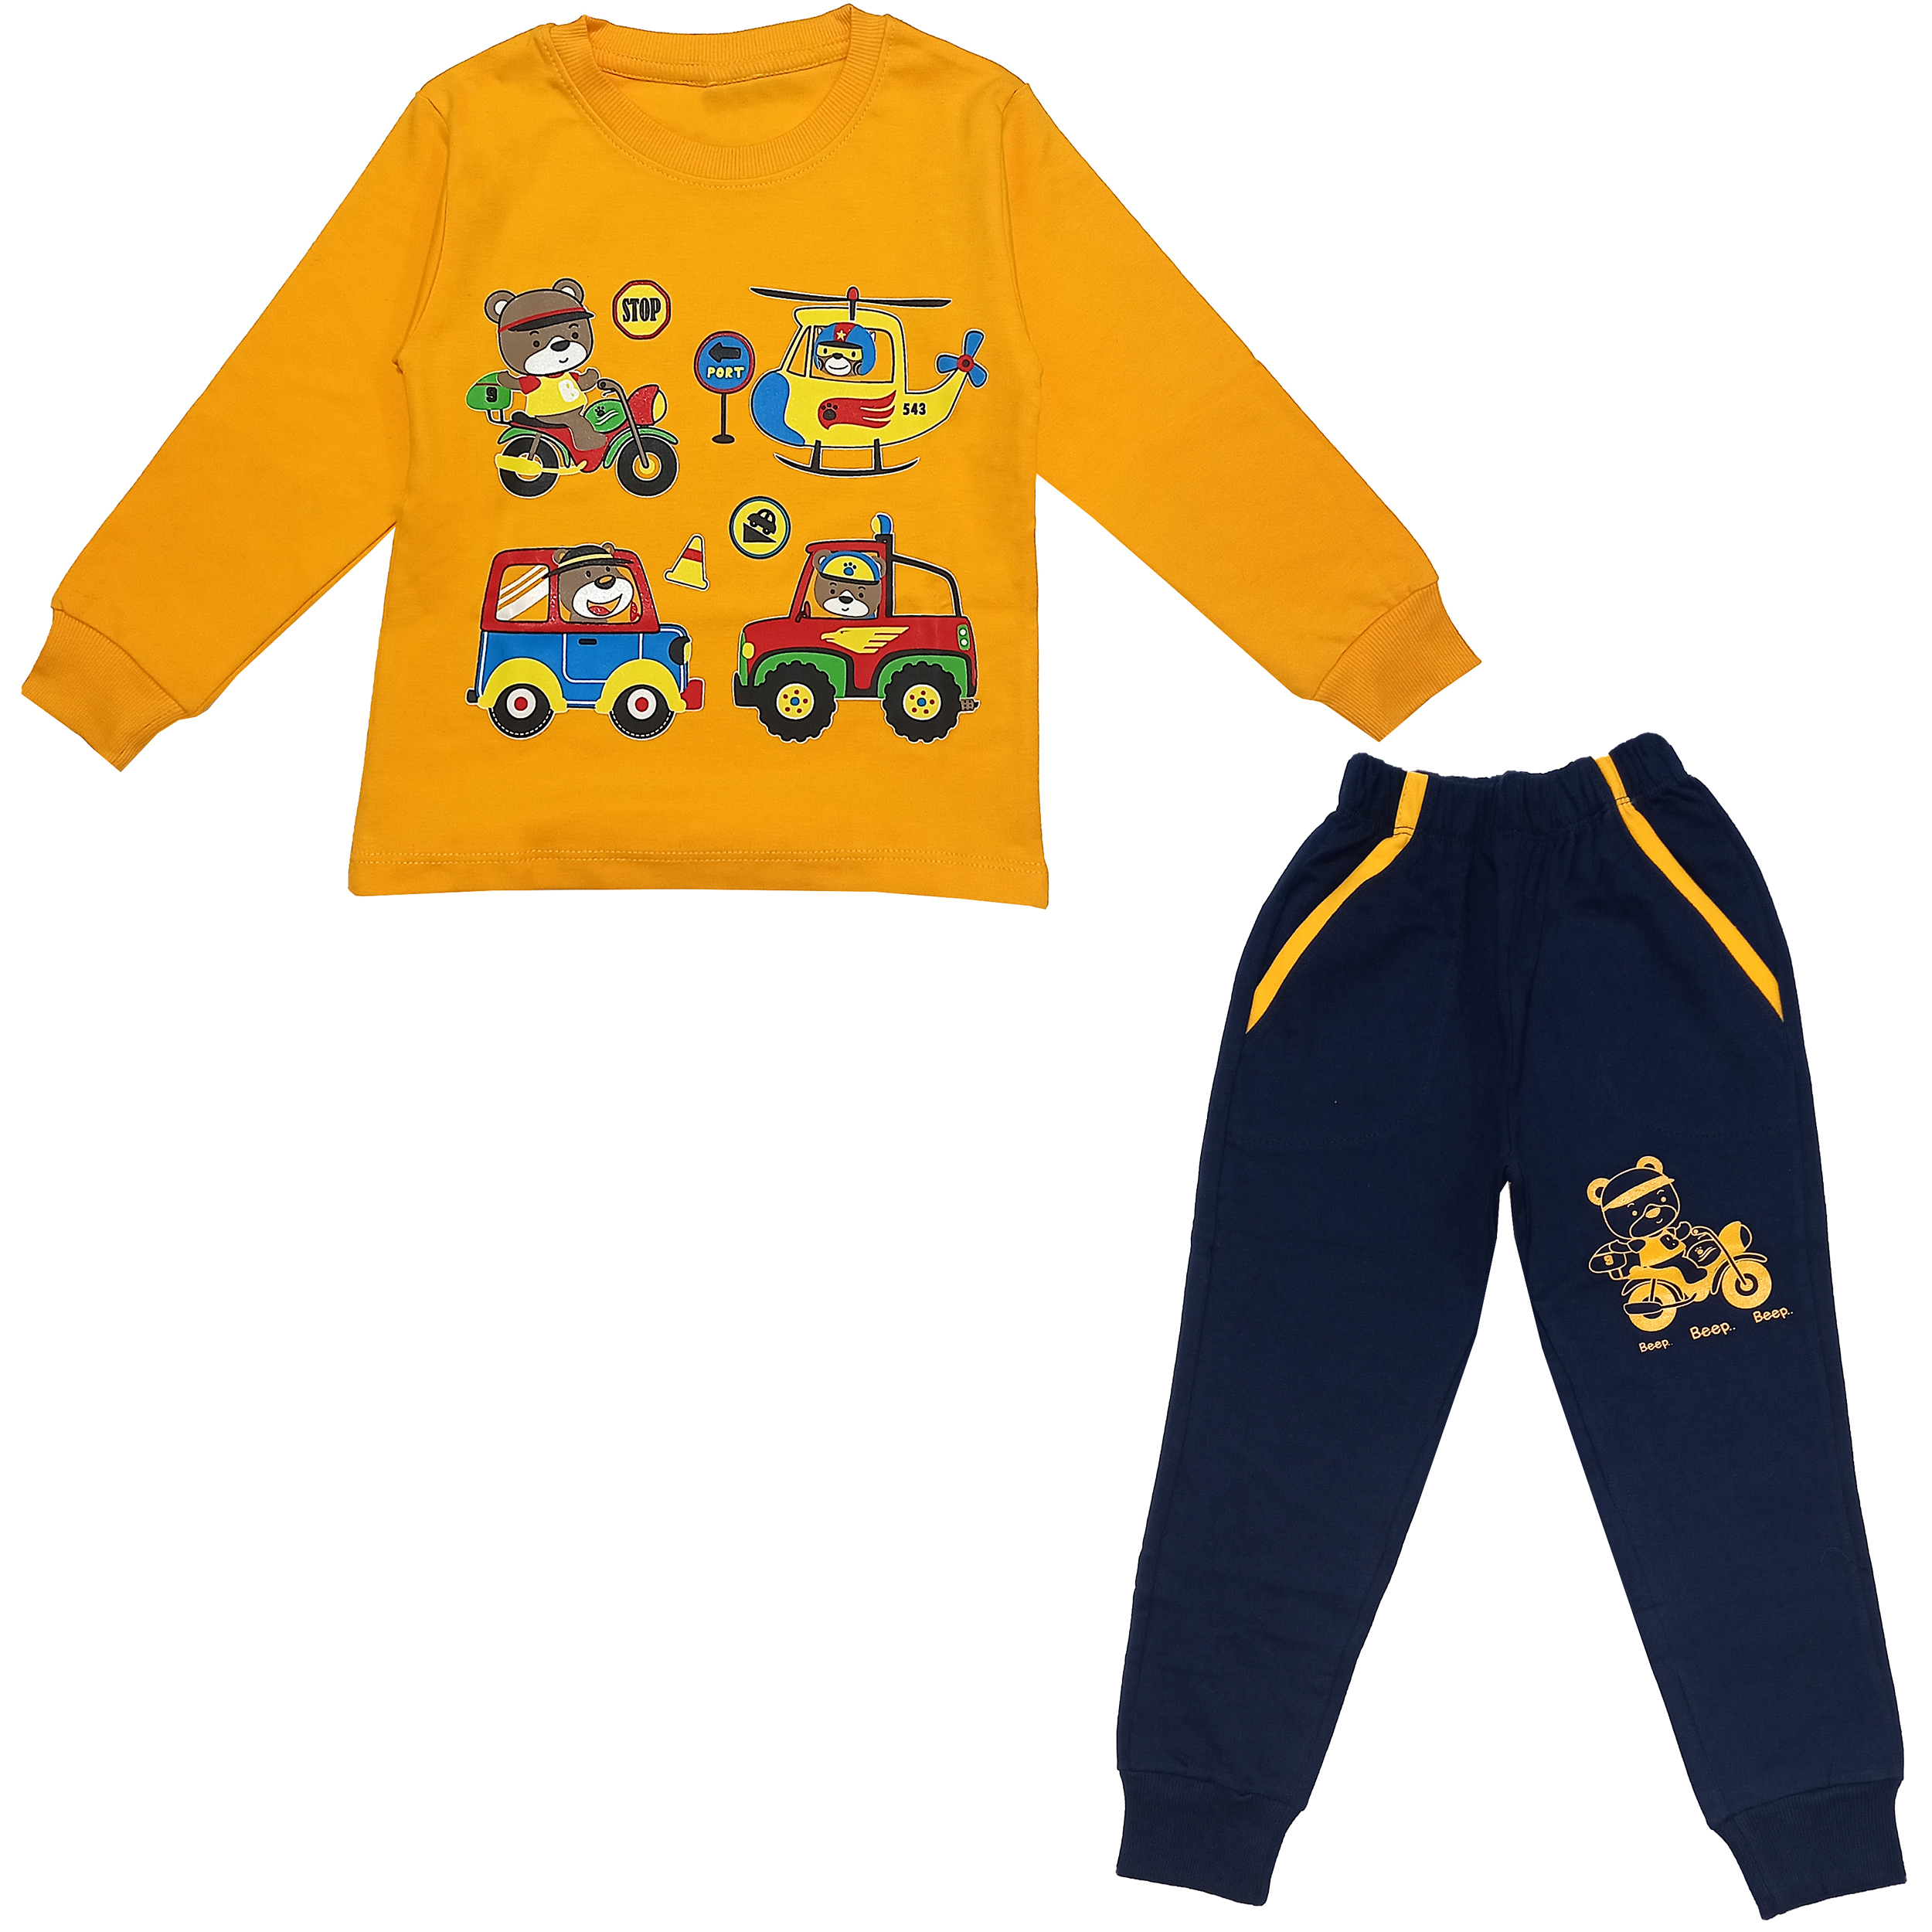 ست تی شرت و شلوار پسرانه مدل خرس و ماشین کد 3480 رنگ زرد